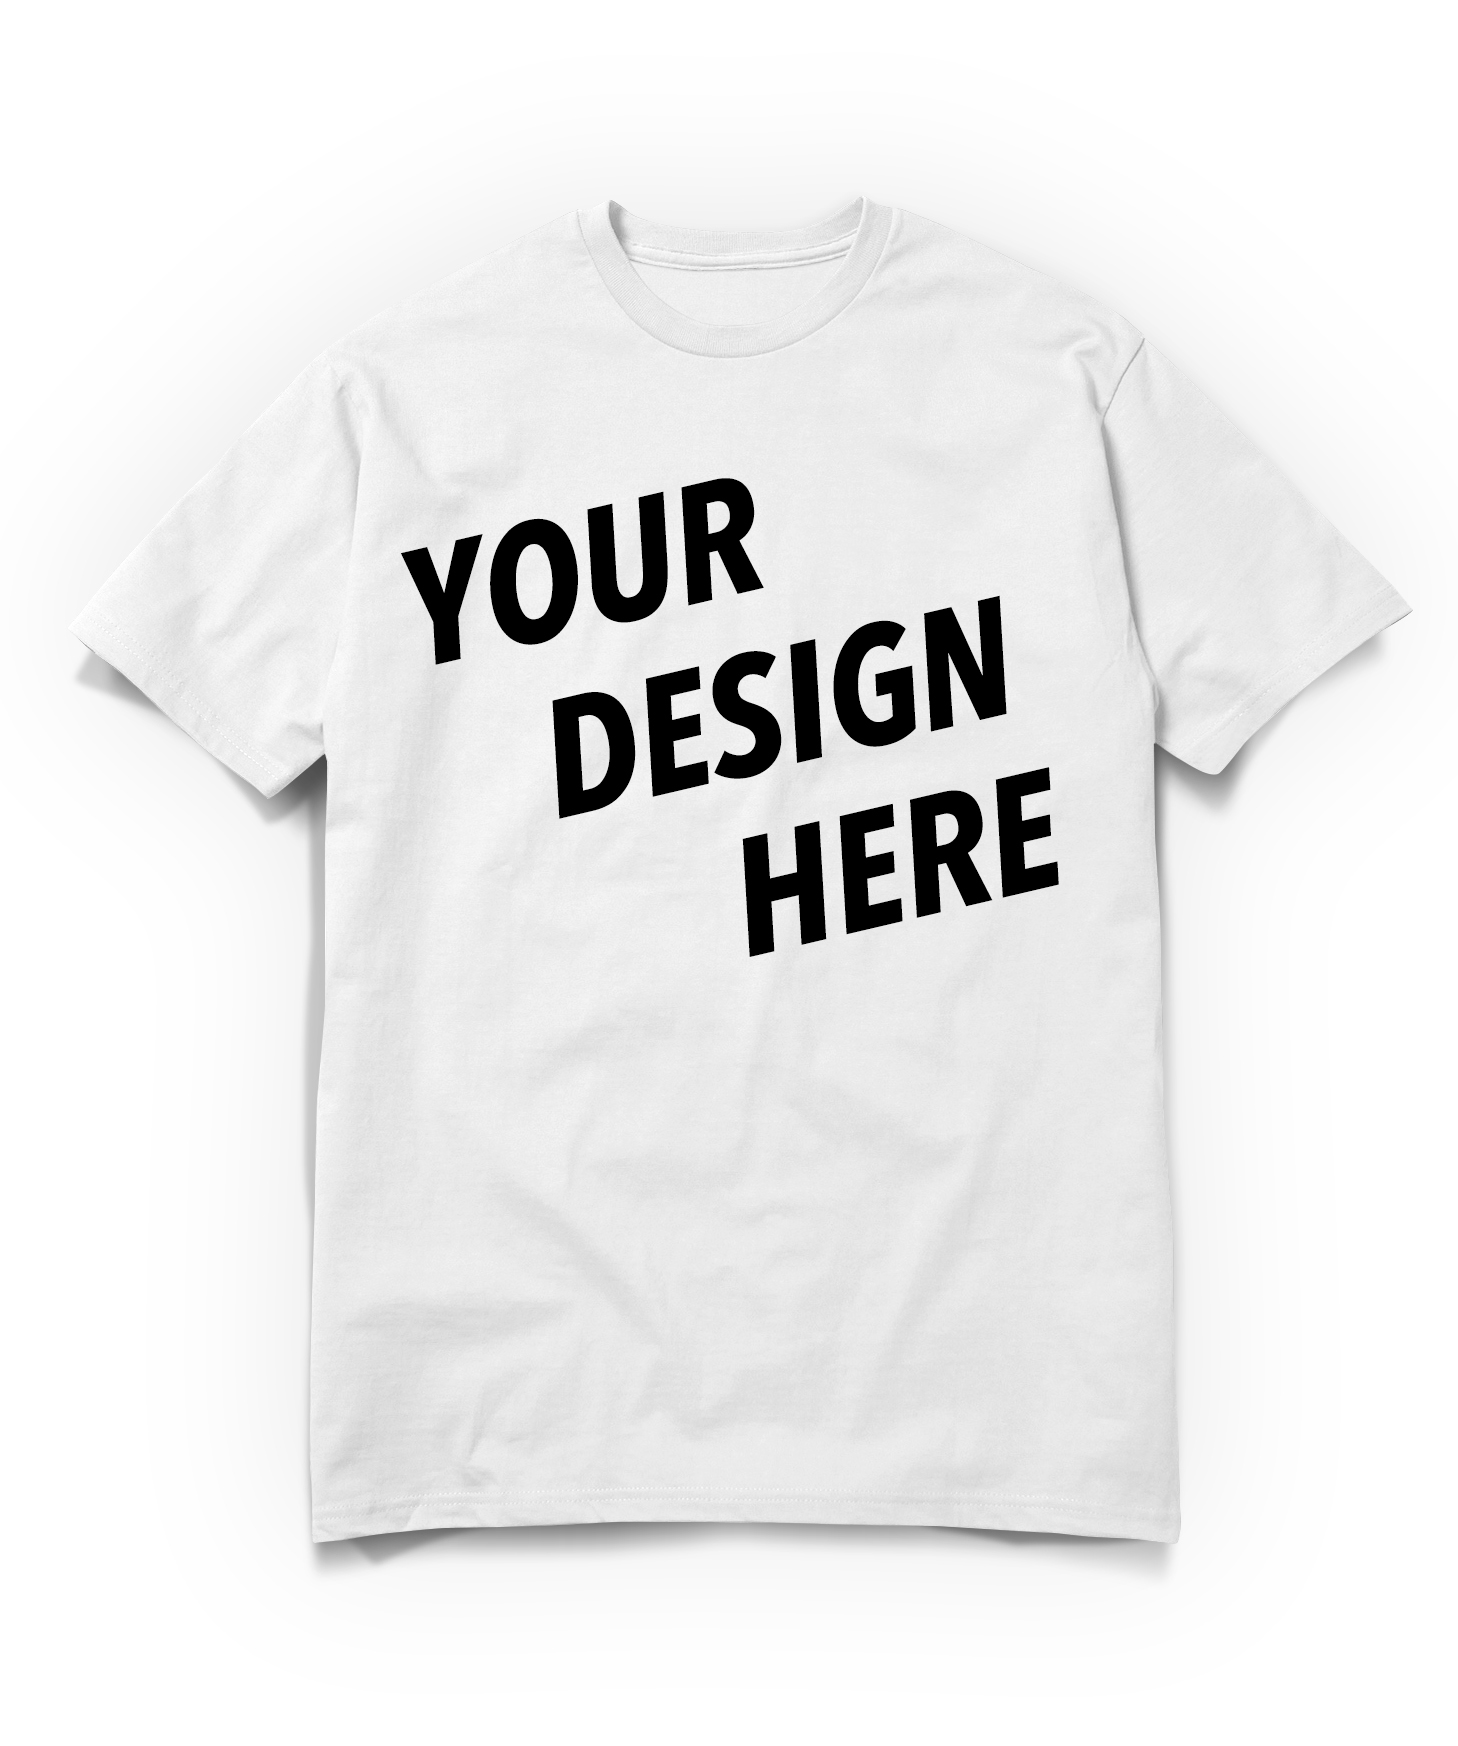 Medium Quantity (25-50) Custom T-Shirt - Add Your Design